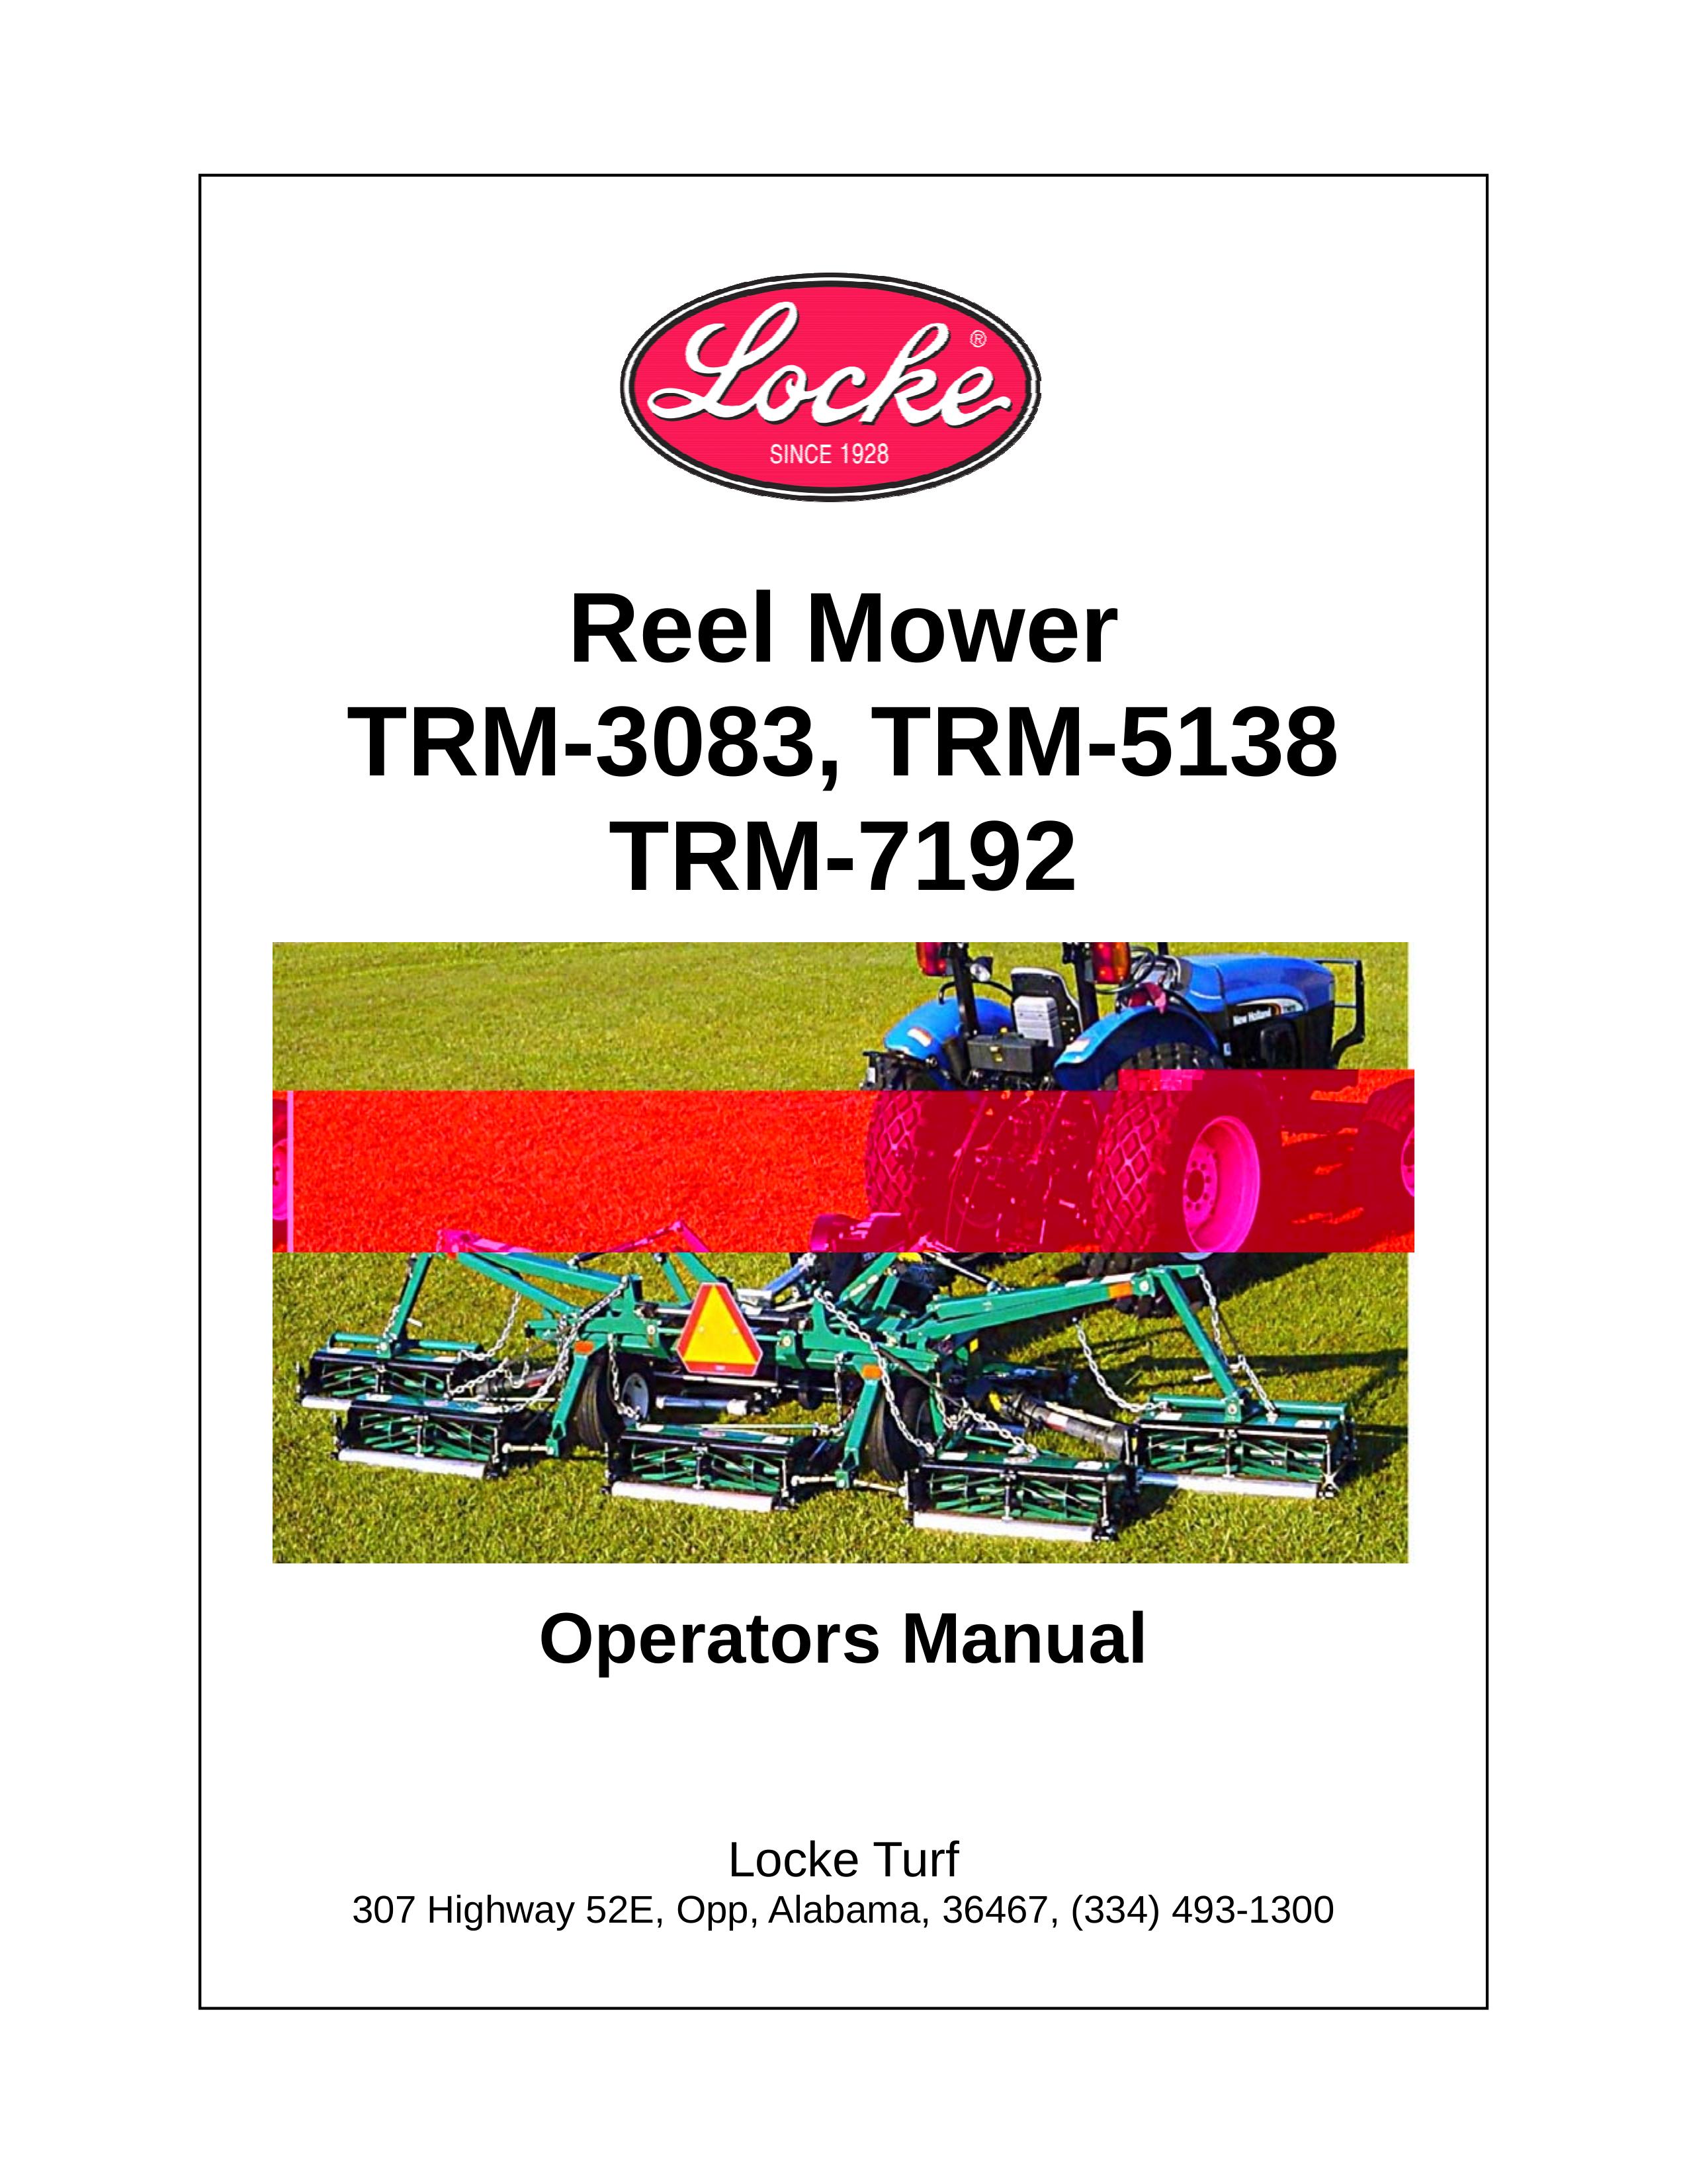 Locke TRM-3083, TRM-5138, TRM-7192 Lawn Mower User Manual